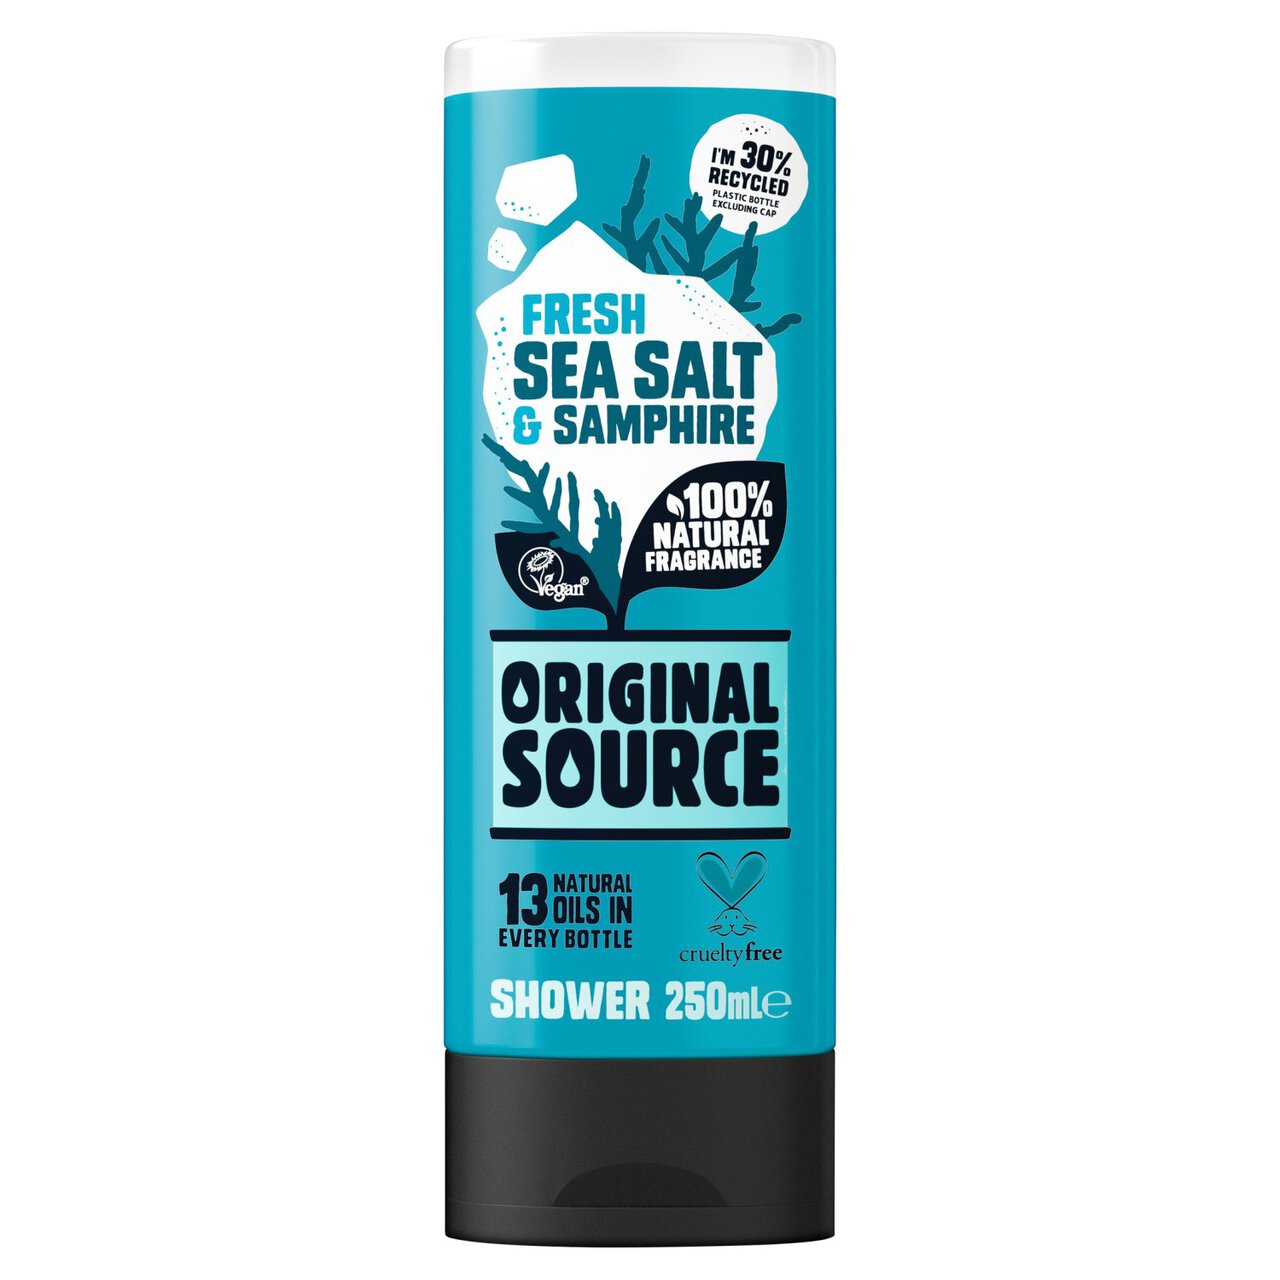 Original Source Sea Salt & Samphire Shower Gel 250ml